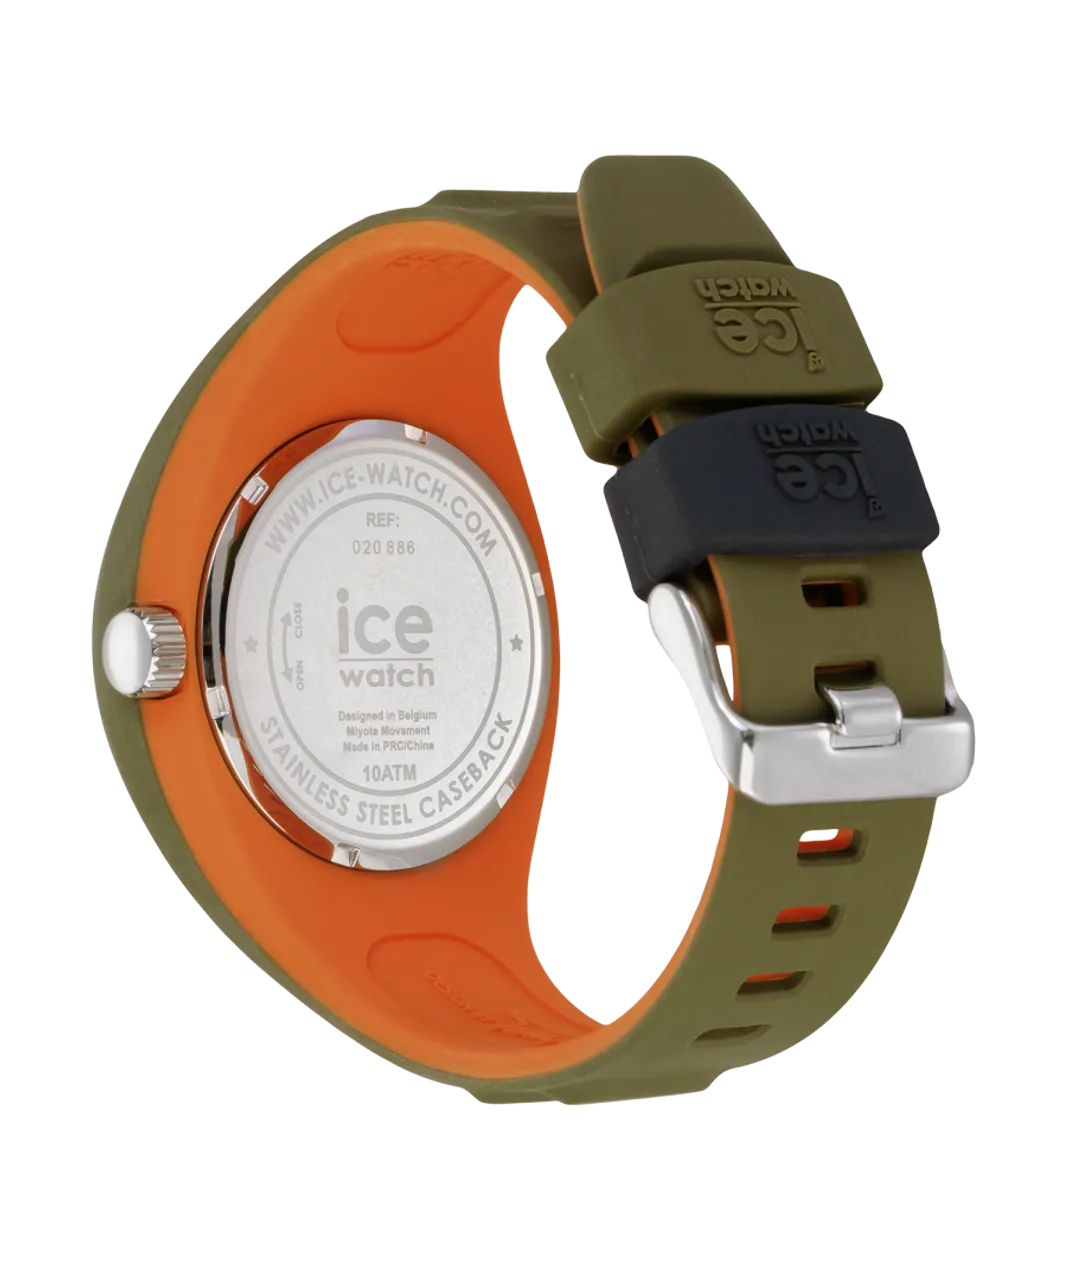 Ice-Watch Ice Watch P. Leclercq - Khaki Orange Mens 020886 Silicone - One Size